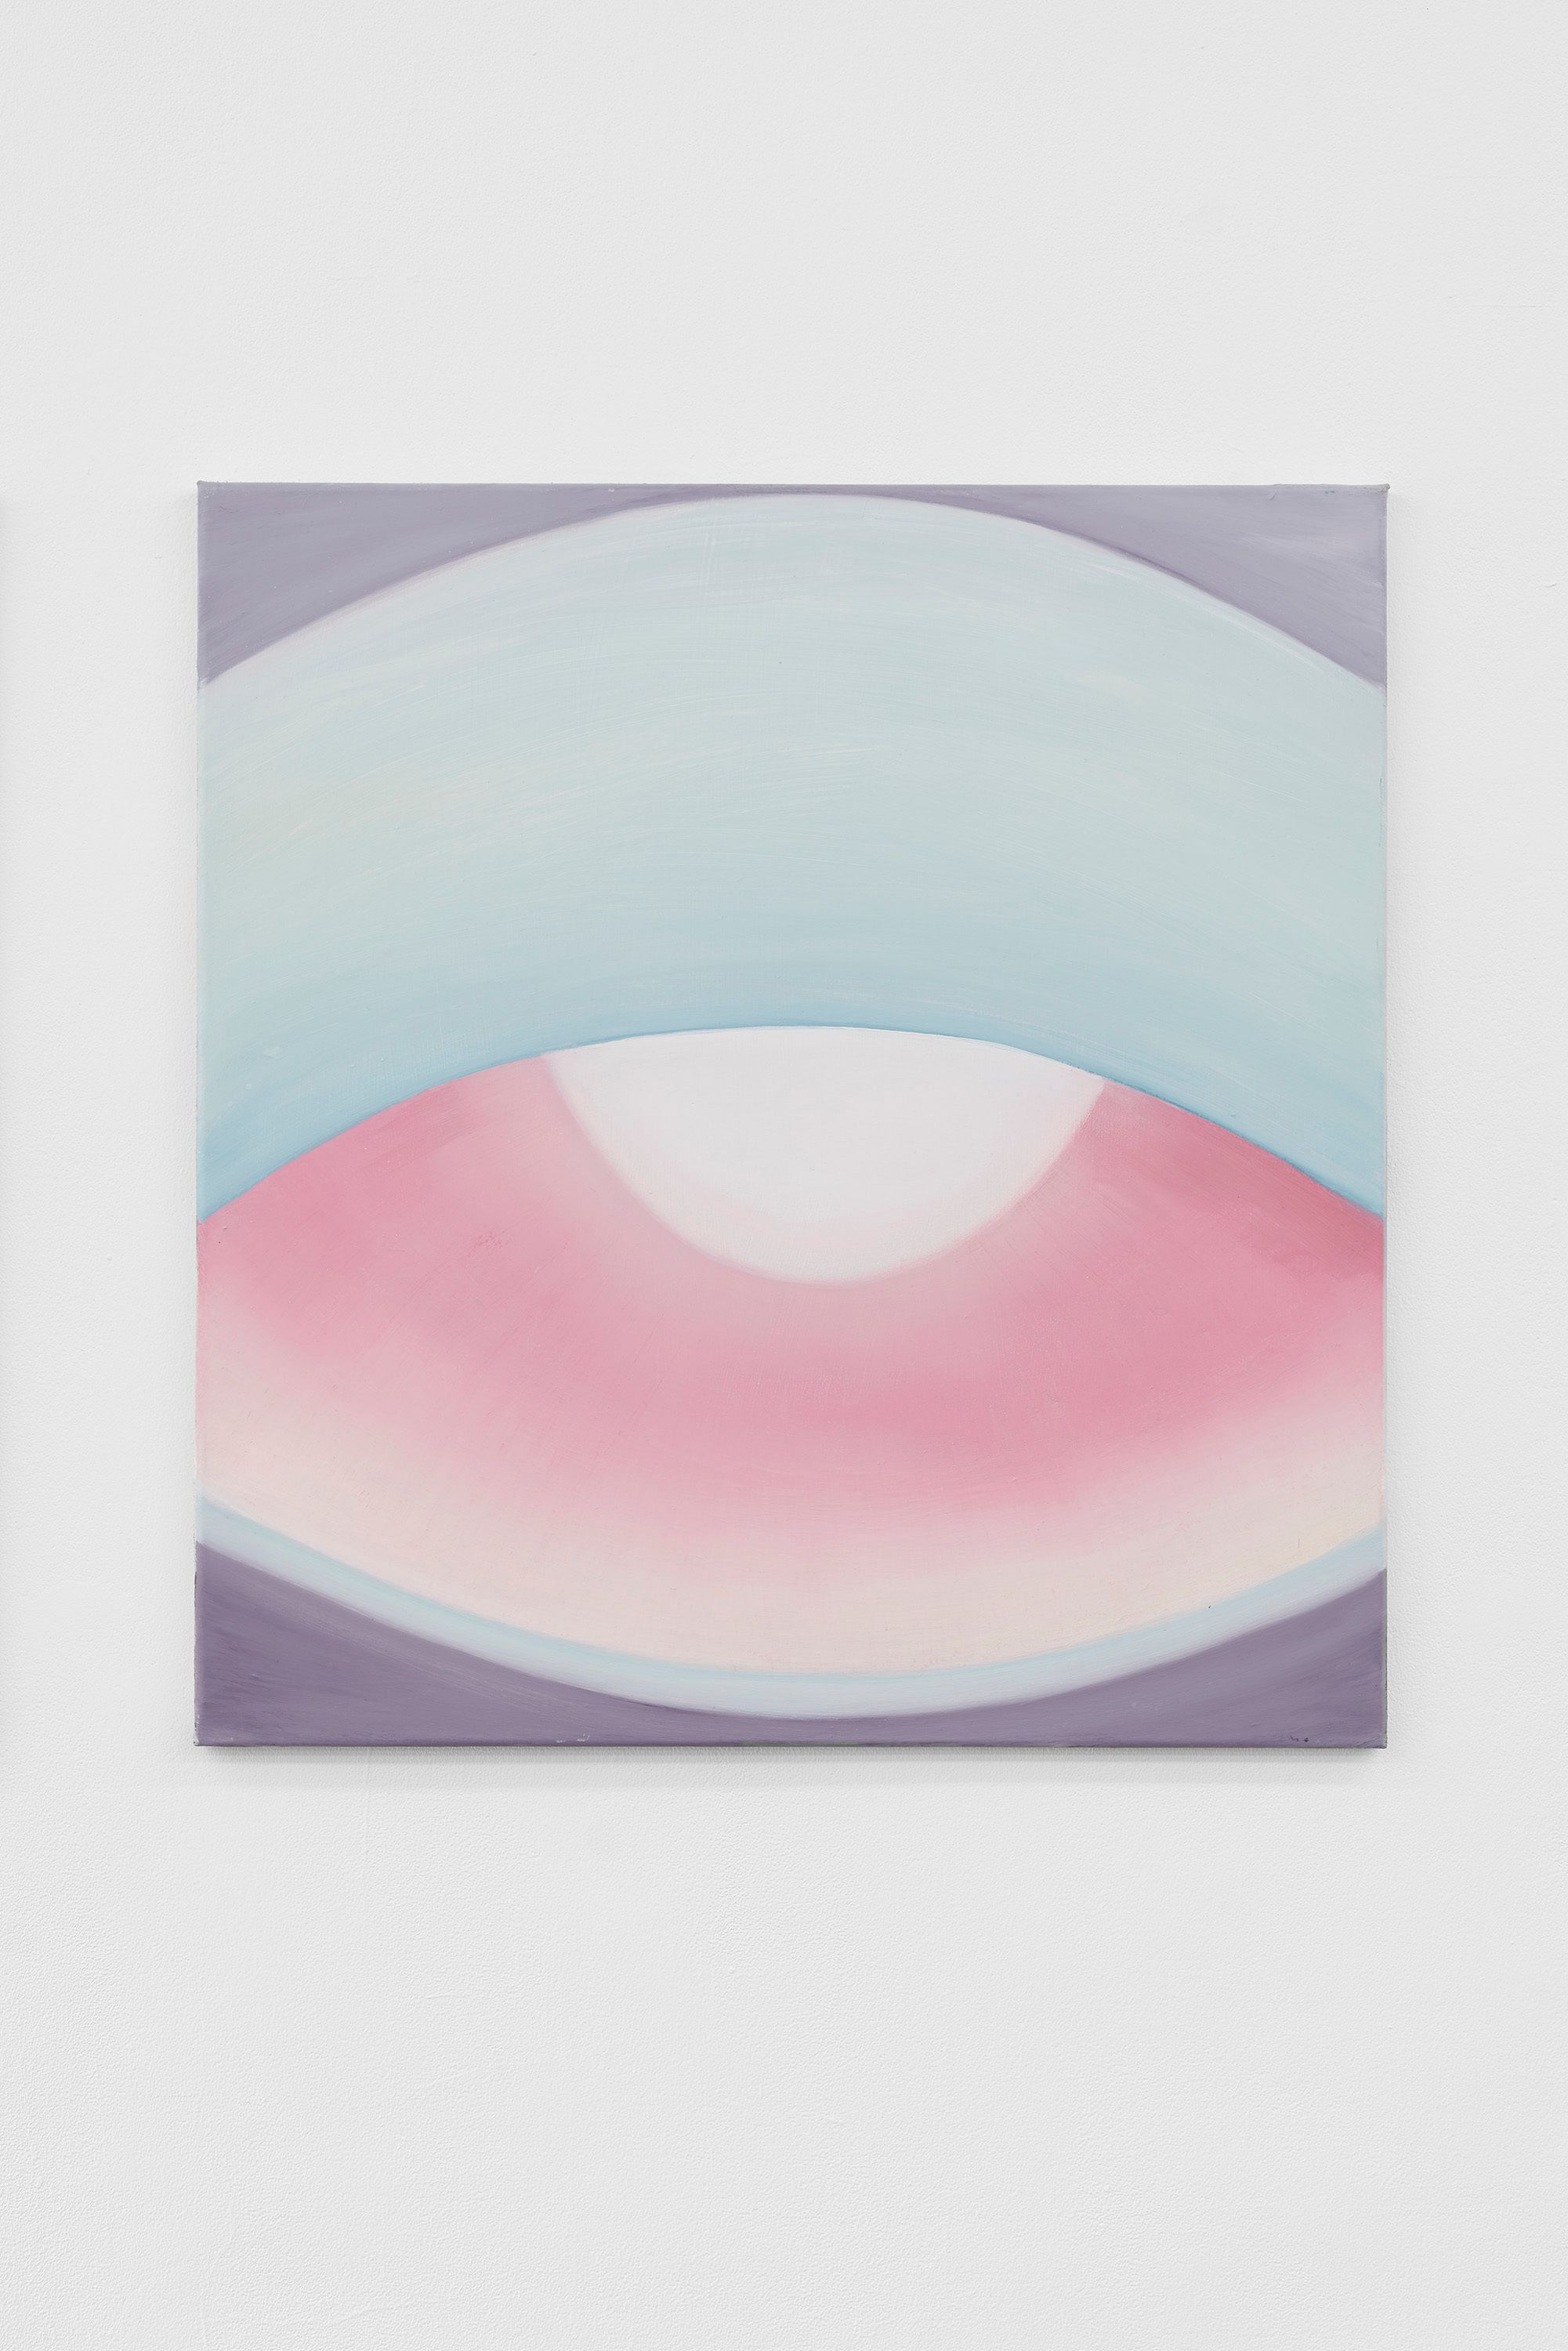 Eric Sidner, Lamp, 2018, Oil on canvas, 80 ⁠× ⁠75 ⁠⁠cm